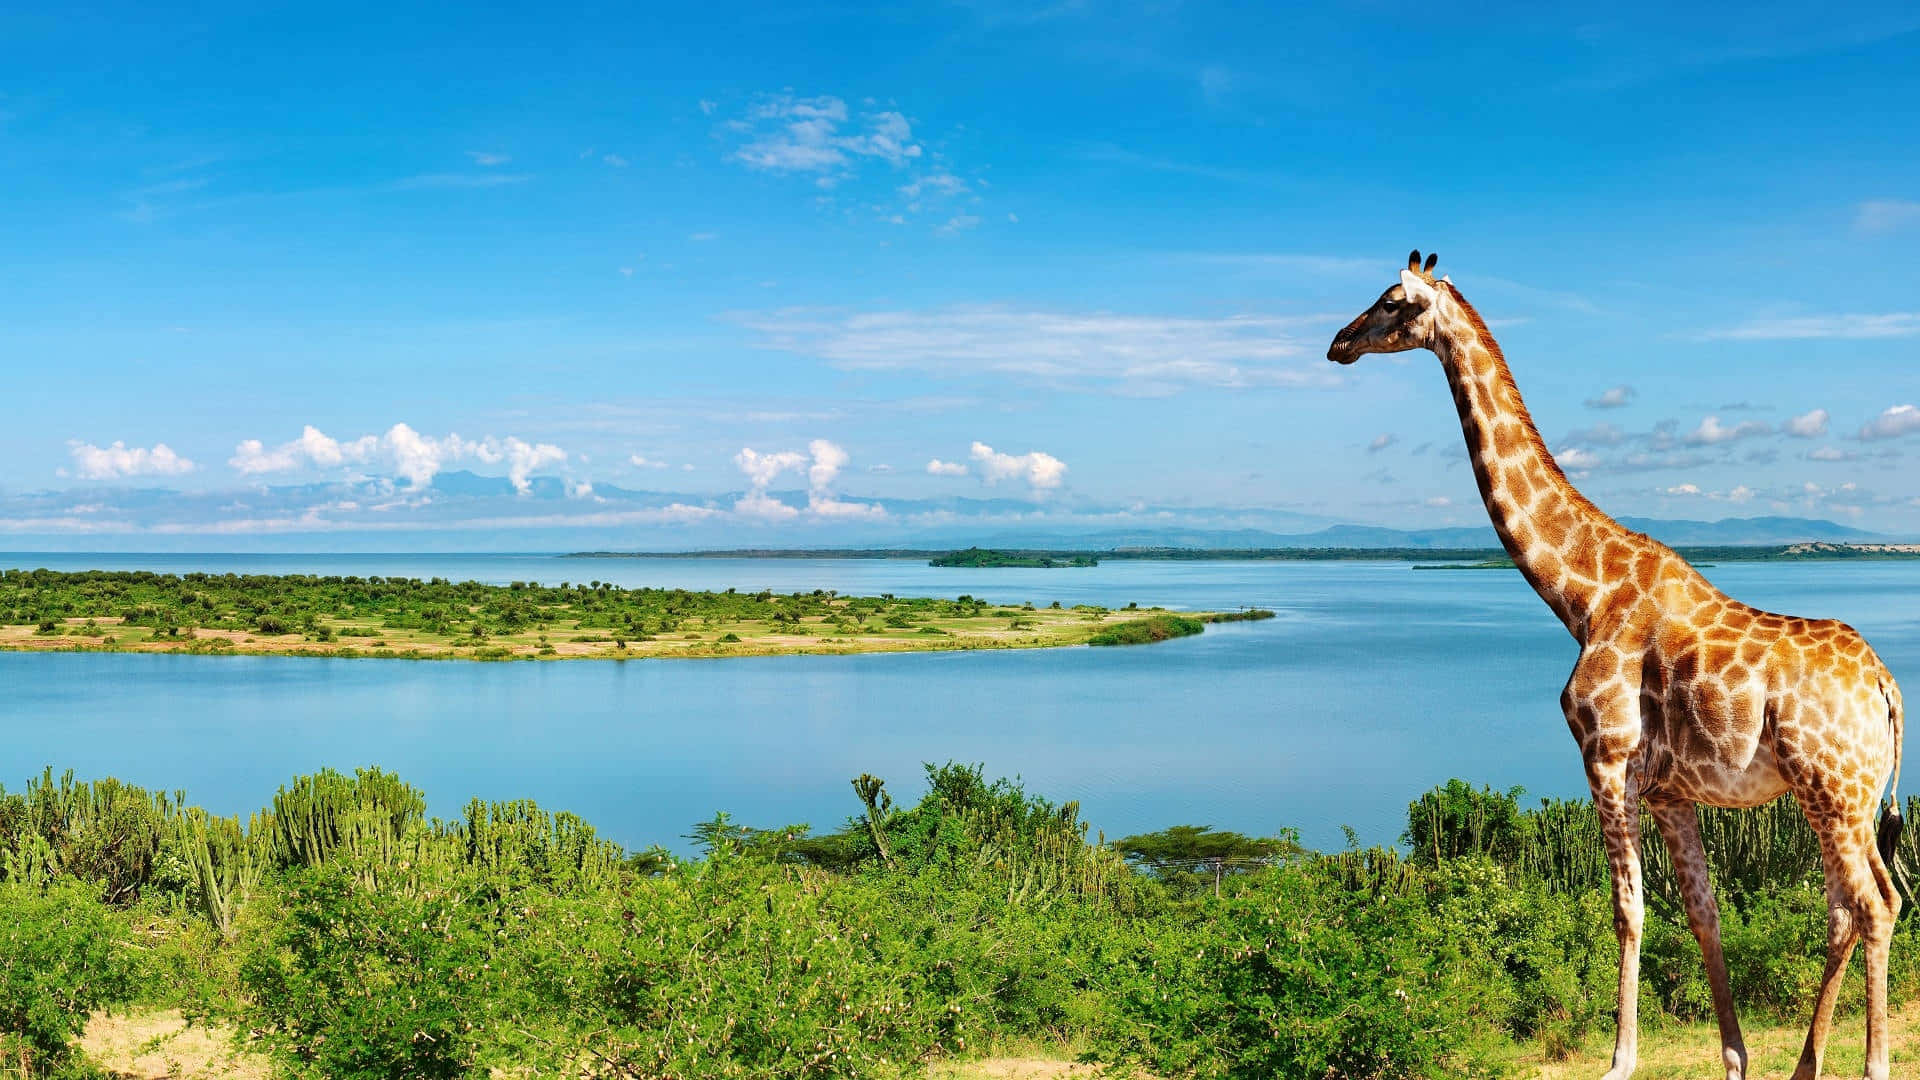 A curious giraffe gazing into the distance